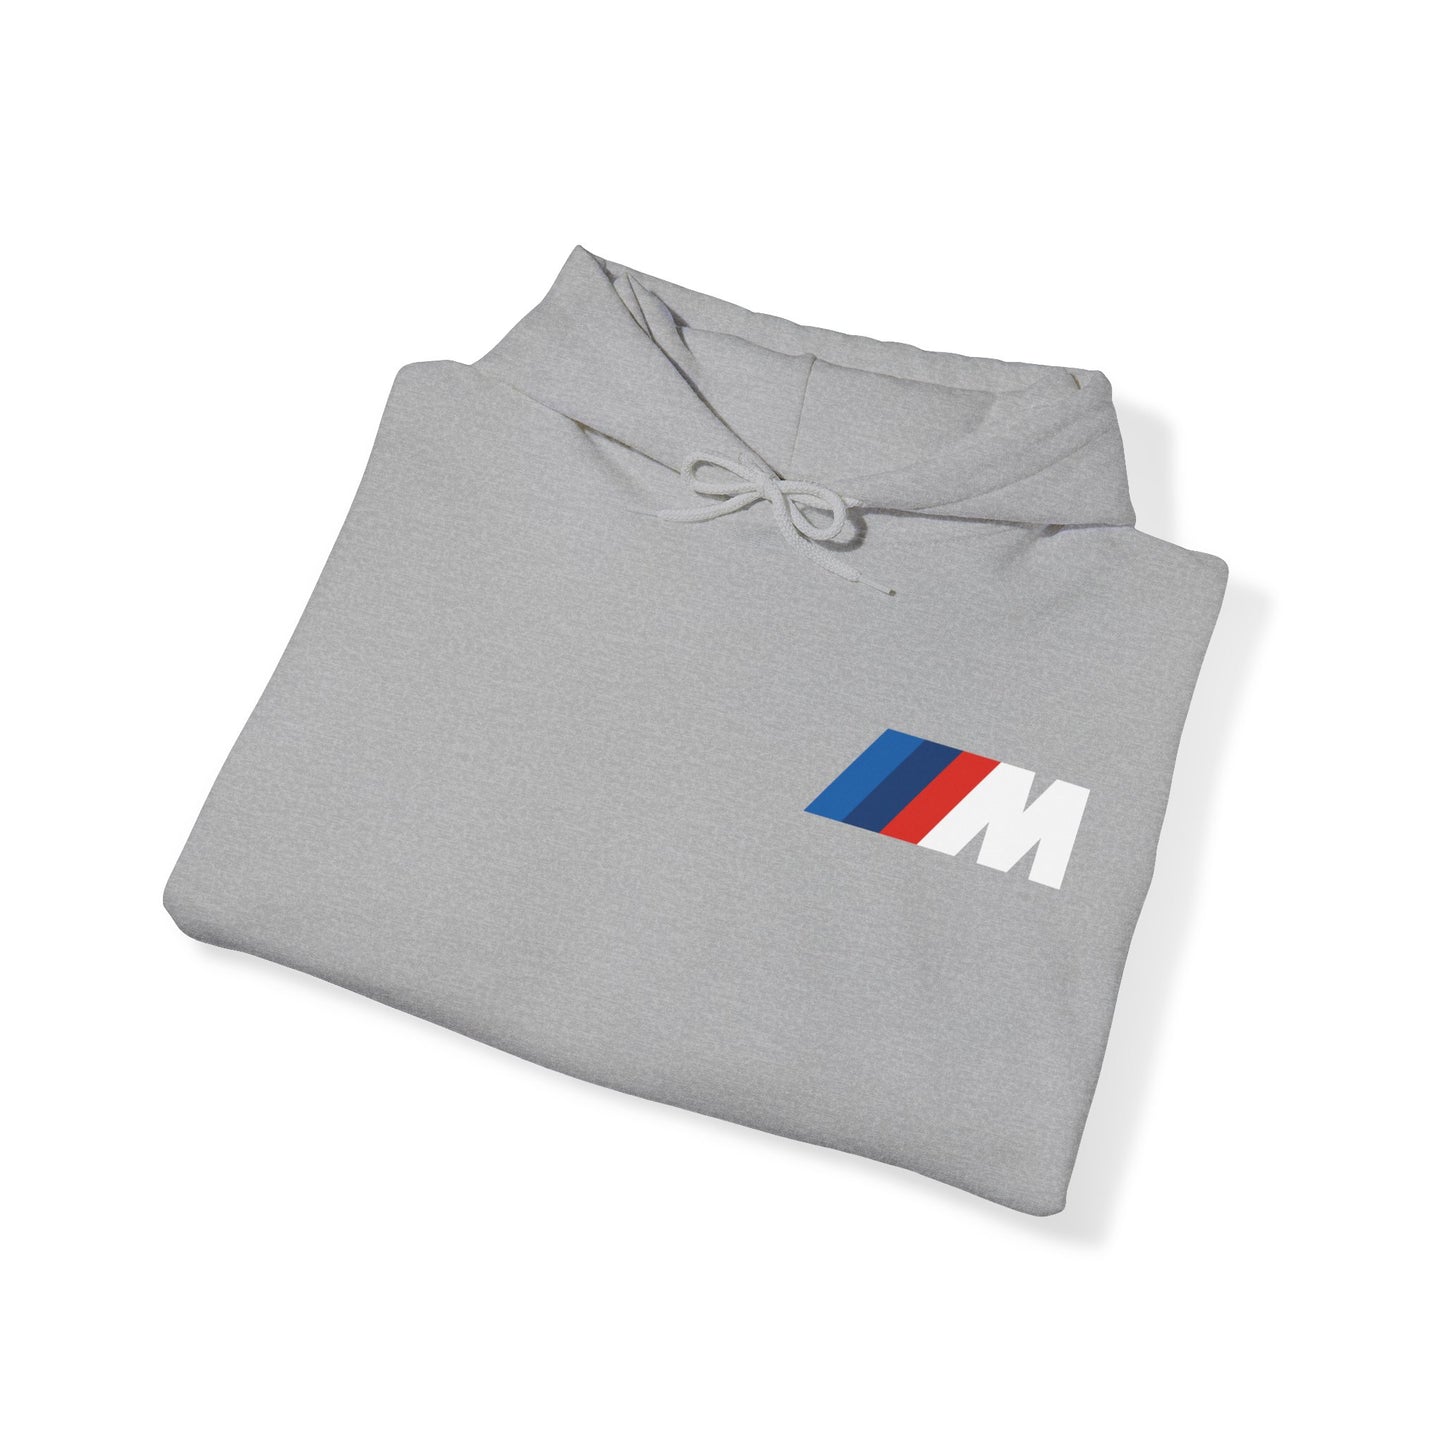 BMW M Unisex Heavy Blend™ Hooded Sweatshirt